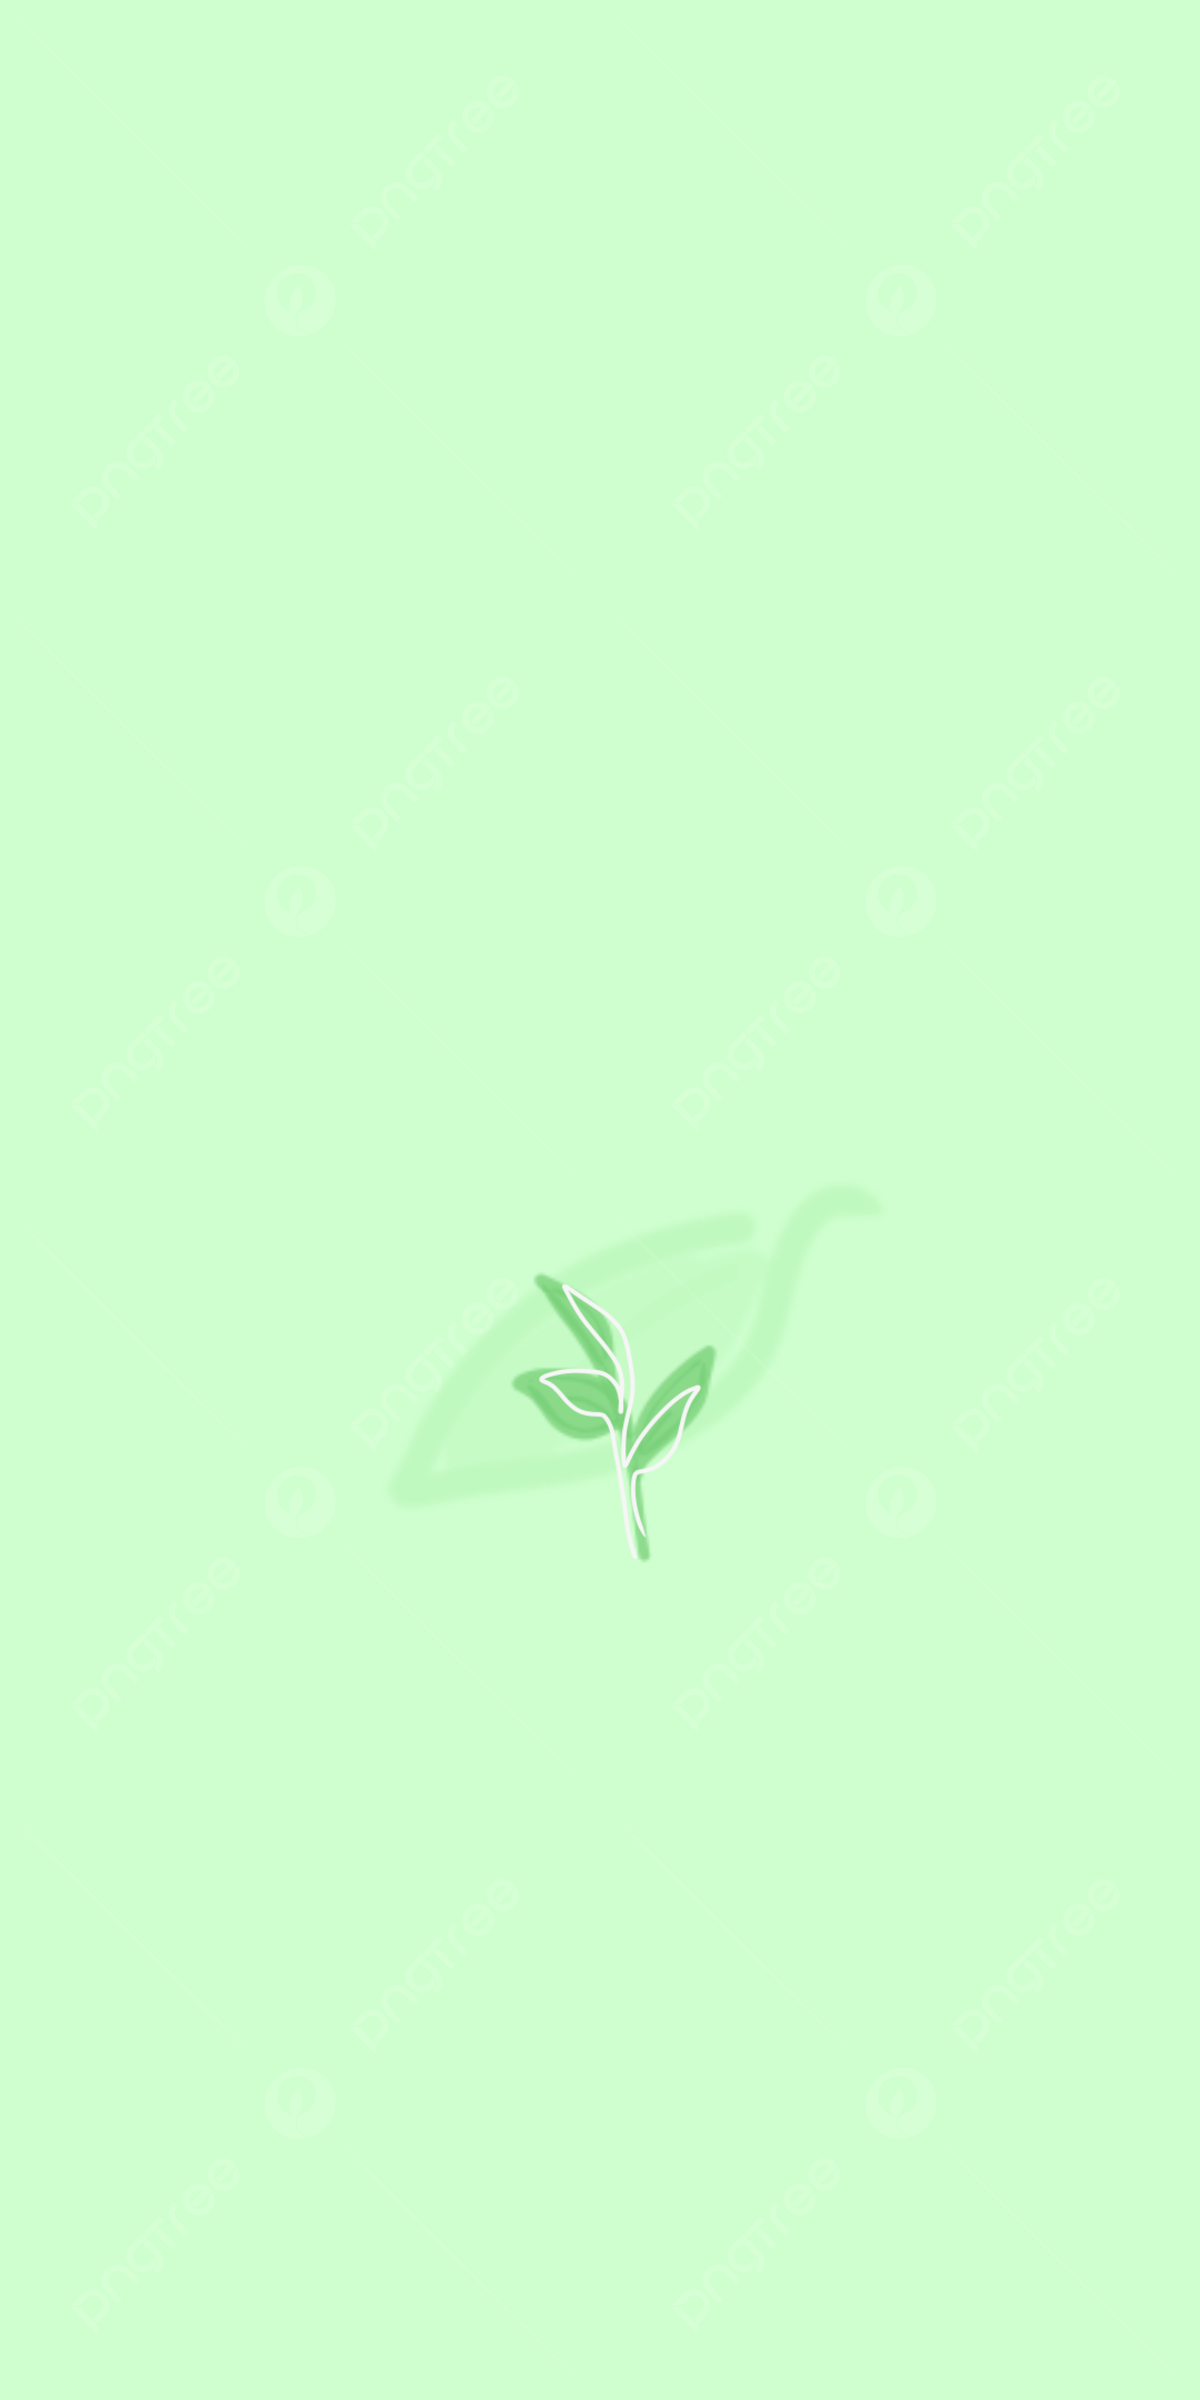  Grün Hintergrundbild 1200x2400. Grüne Teeblatttapete Hintergrund Hintergrundbild zum kostenlosen Download